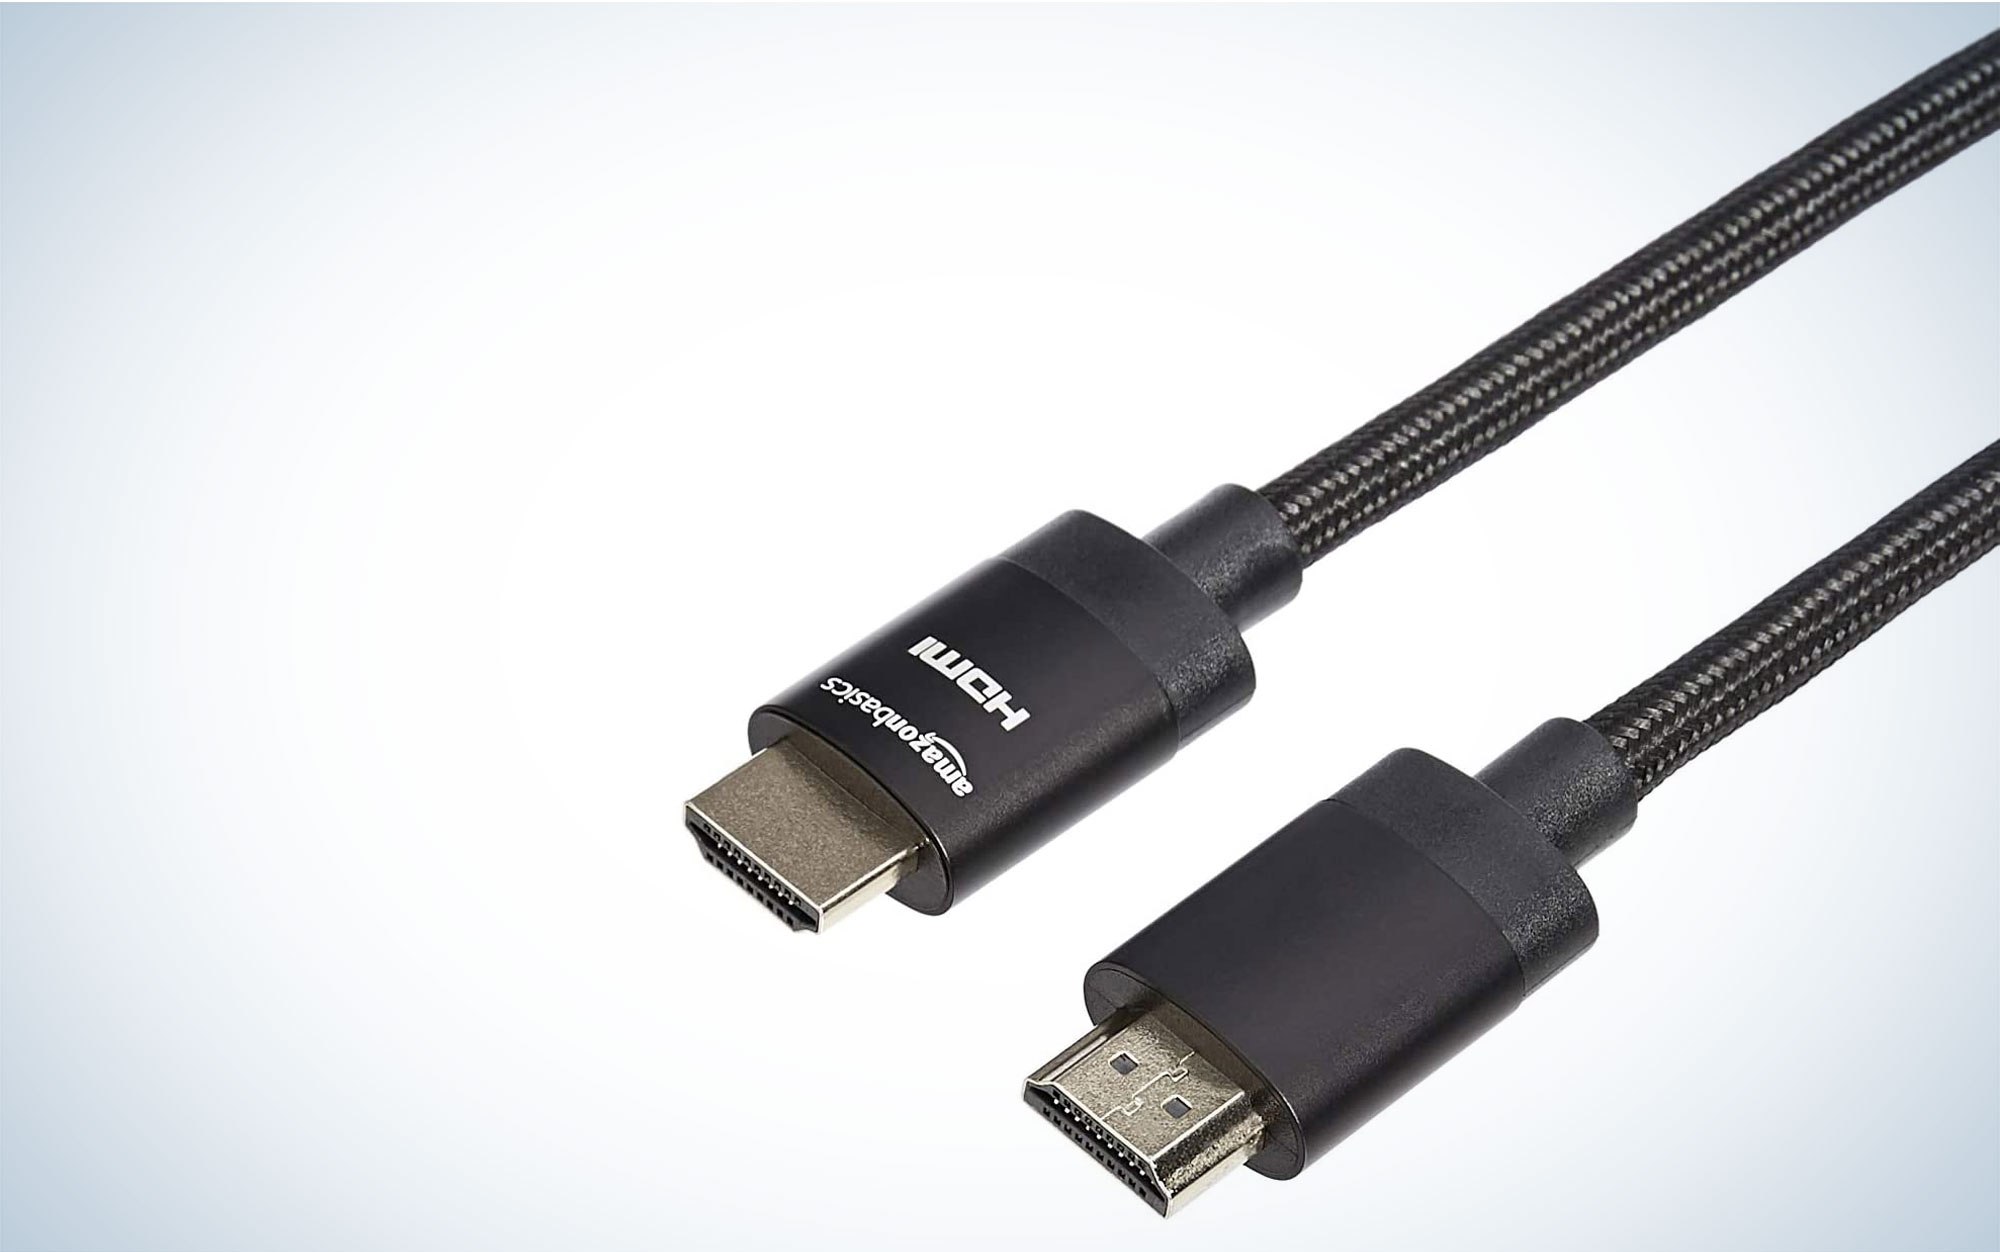 AV STAR - High Speed 8K HDMI 2.1 Lead Ethernet/ARC, Gold Plated, 2m 